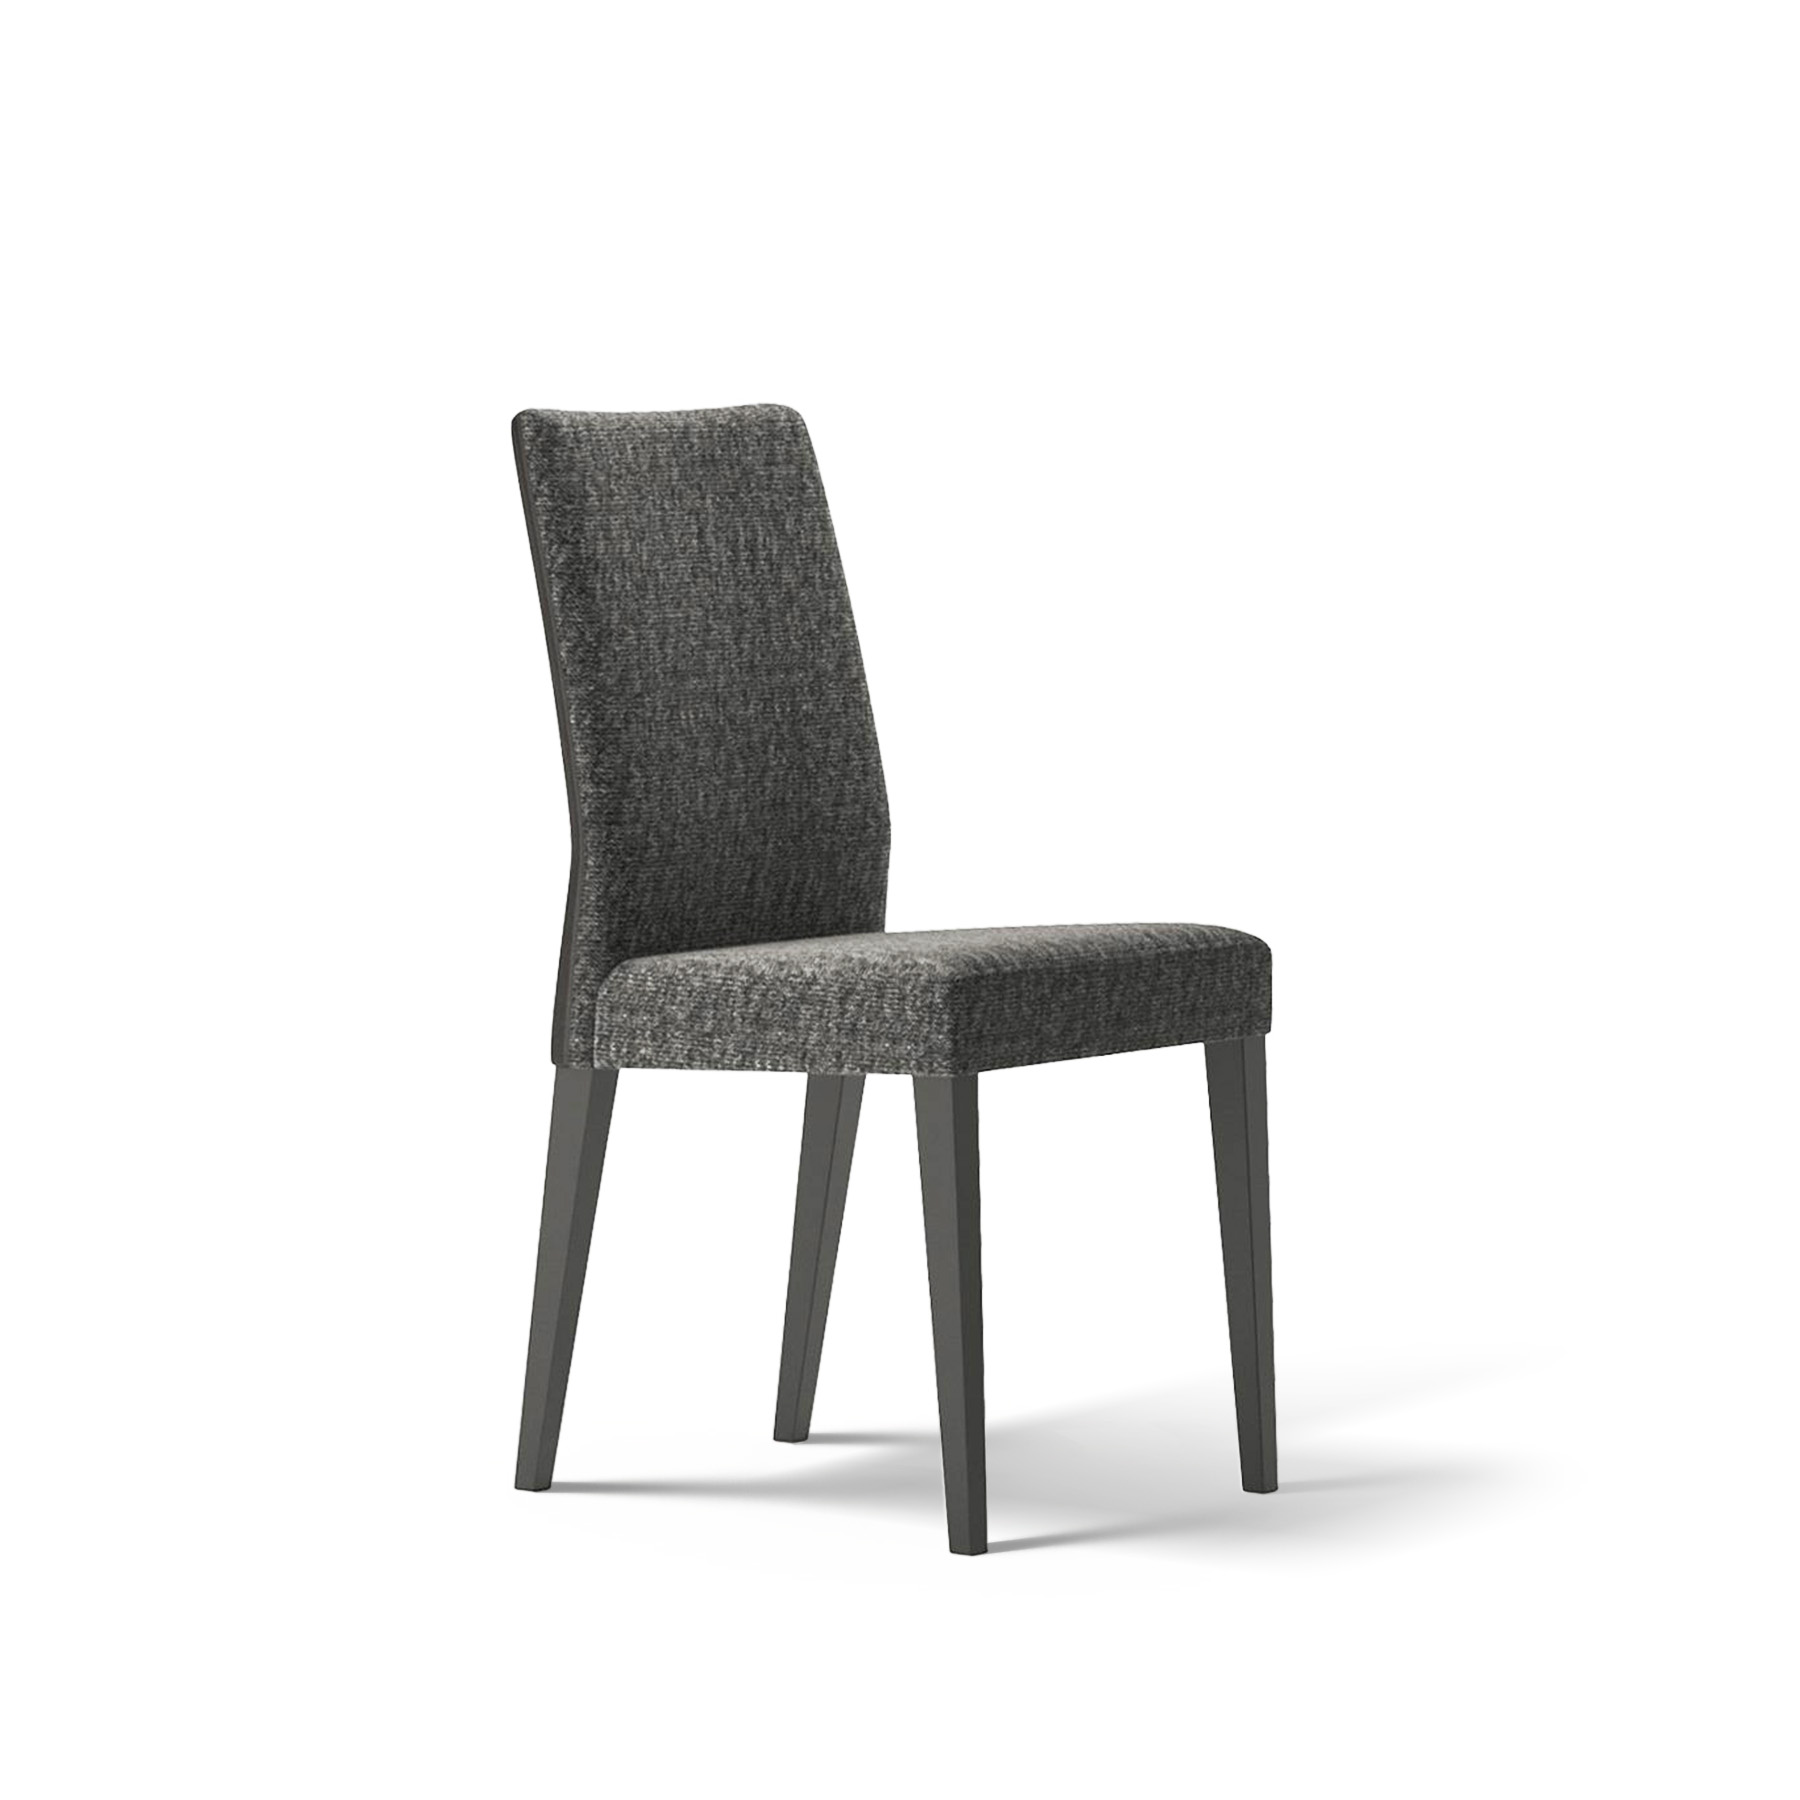 ergonomic dining chair como in dark grey